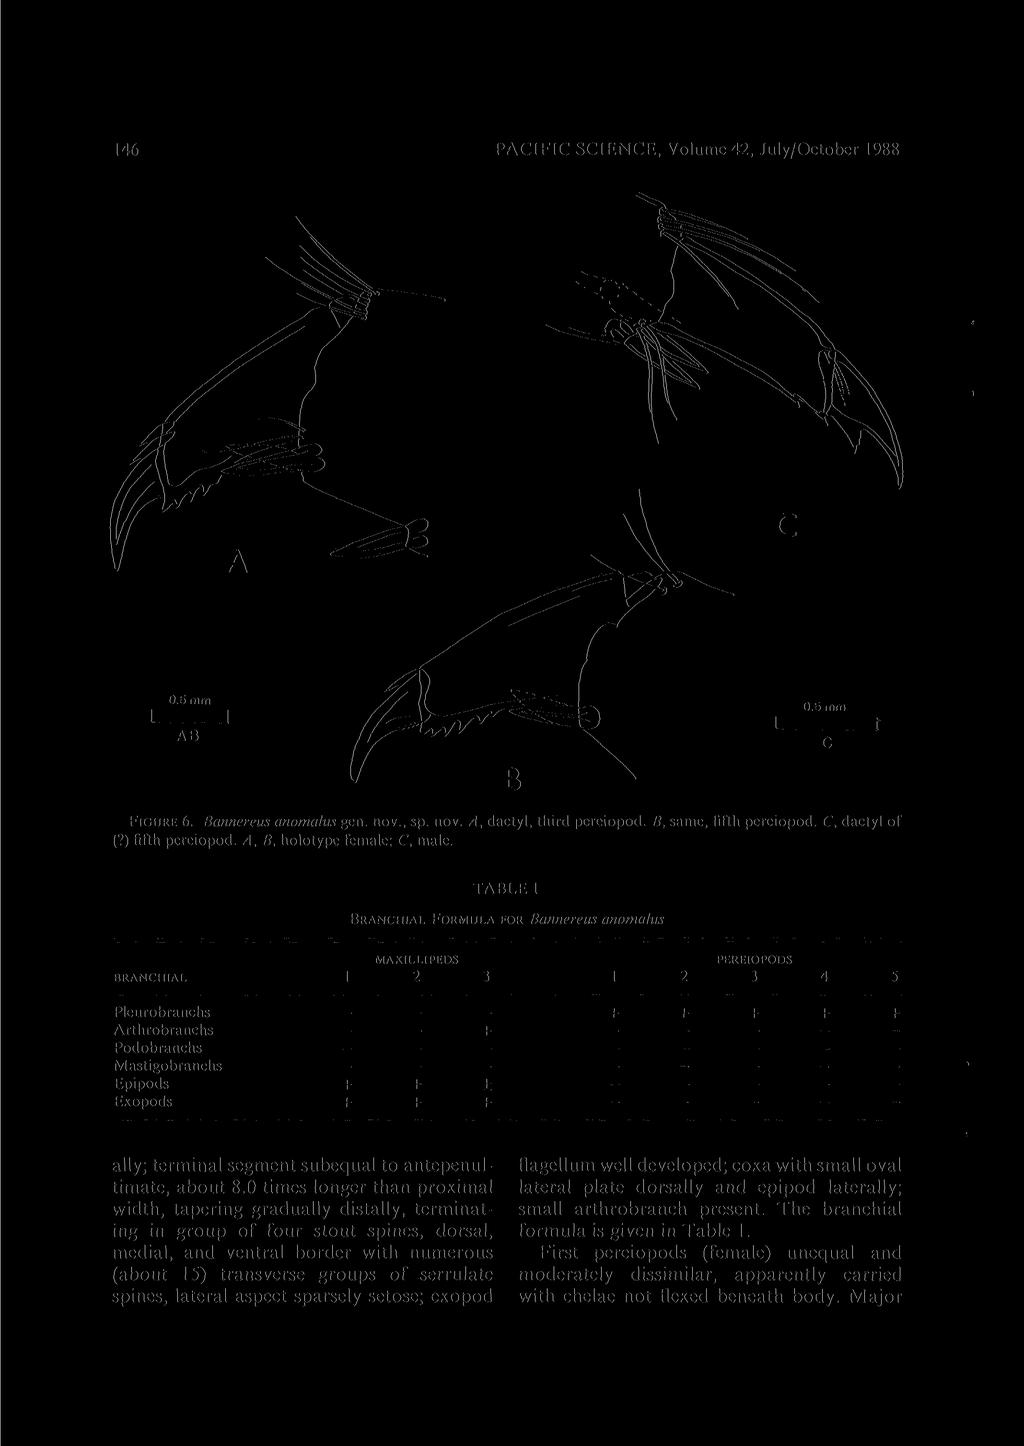 146 PACIFIC SCIENCE, Volume 42, July/October 1988 FIGURE 6. Bannereus anomalus gen. nov., sp. nov. A, dactyl, third pereiopod. B, same, fifth pereiopod. C, dactyl of (?) fifth pereiopod.